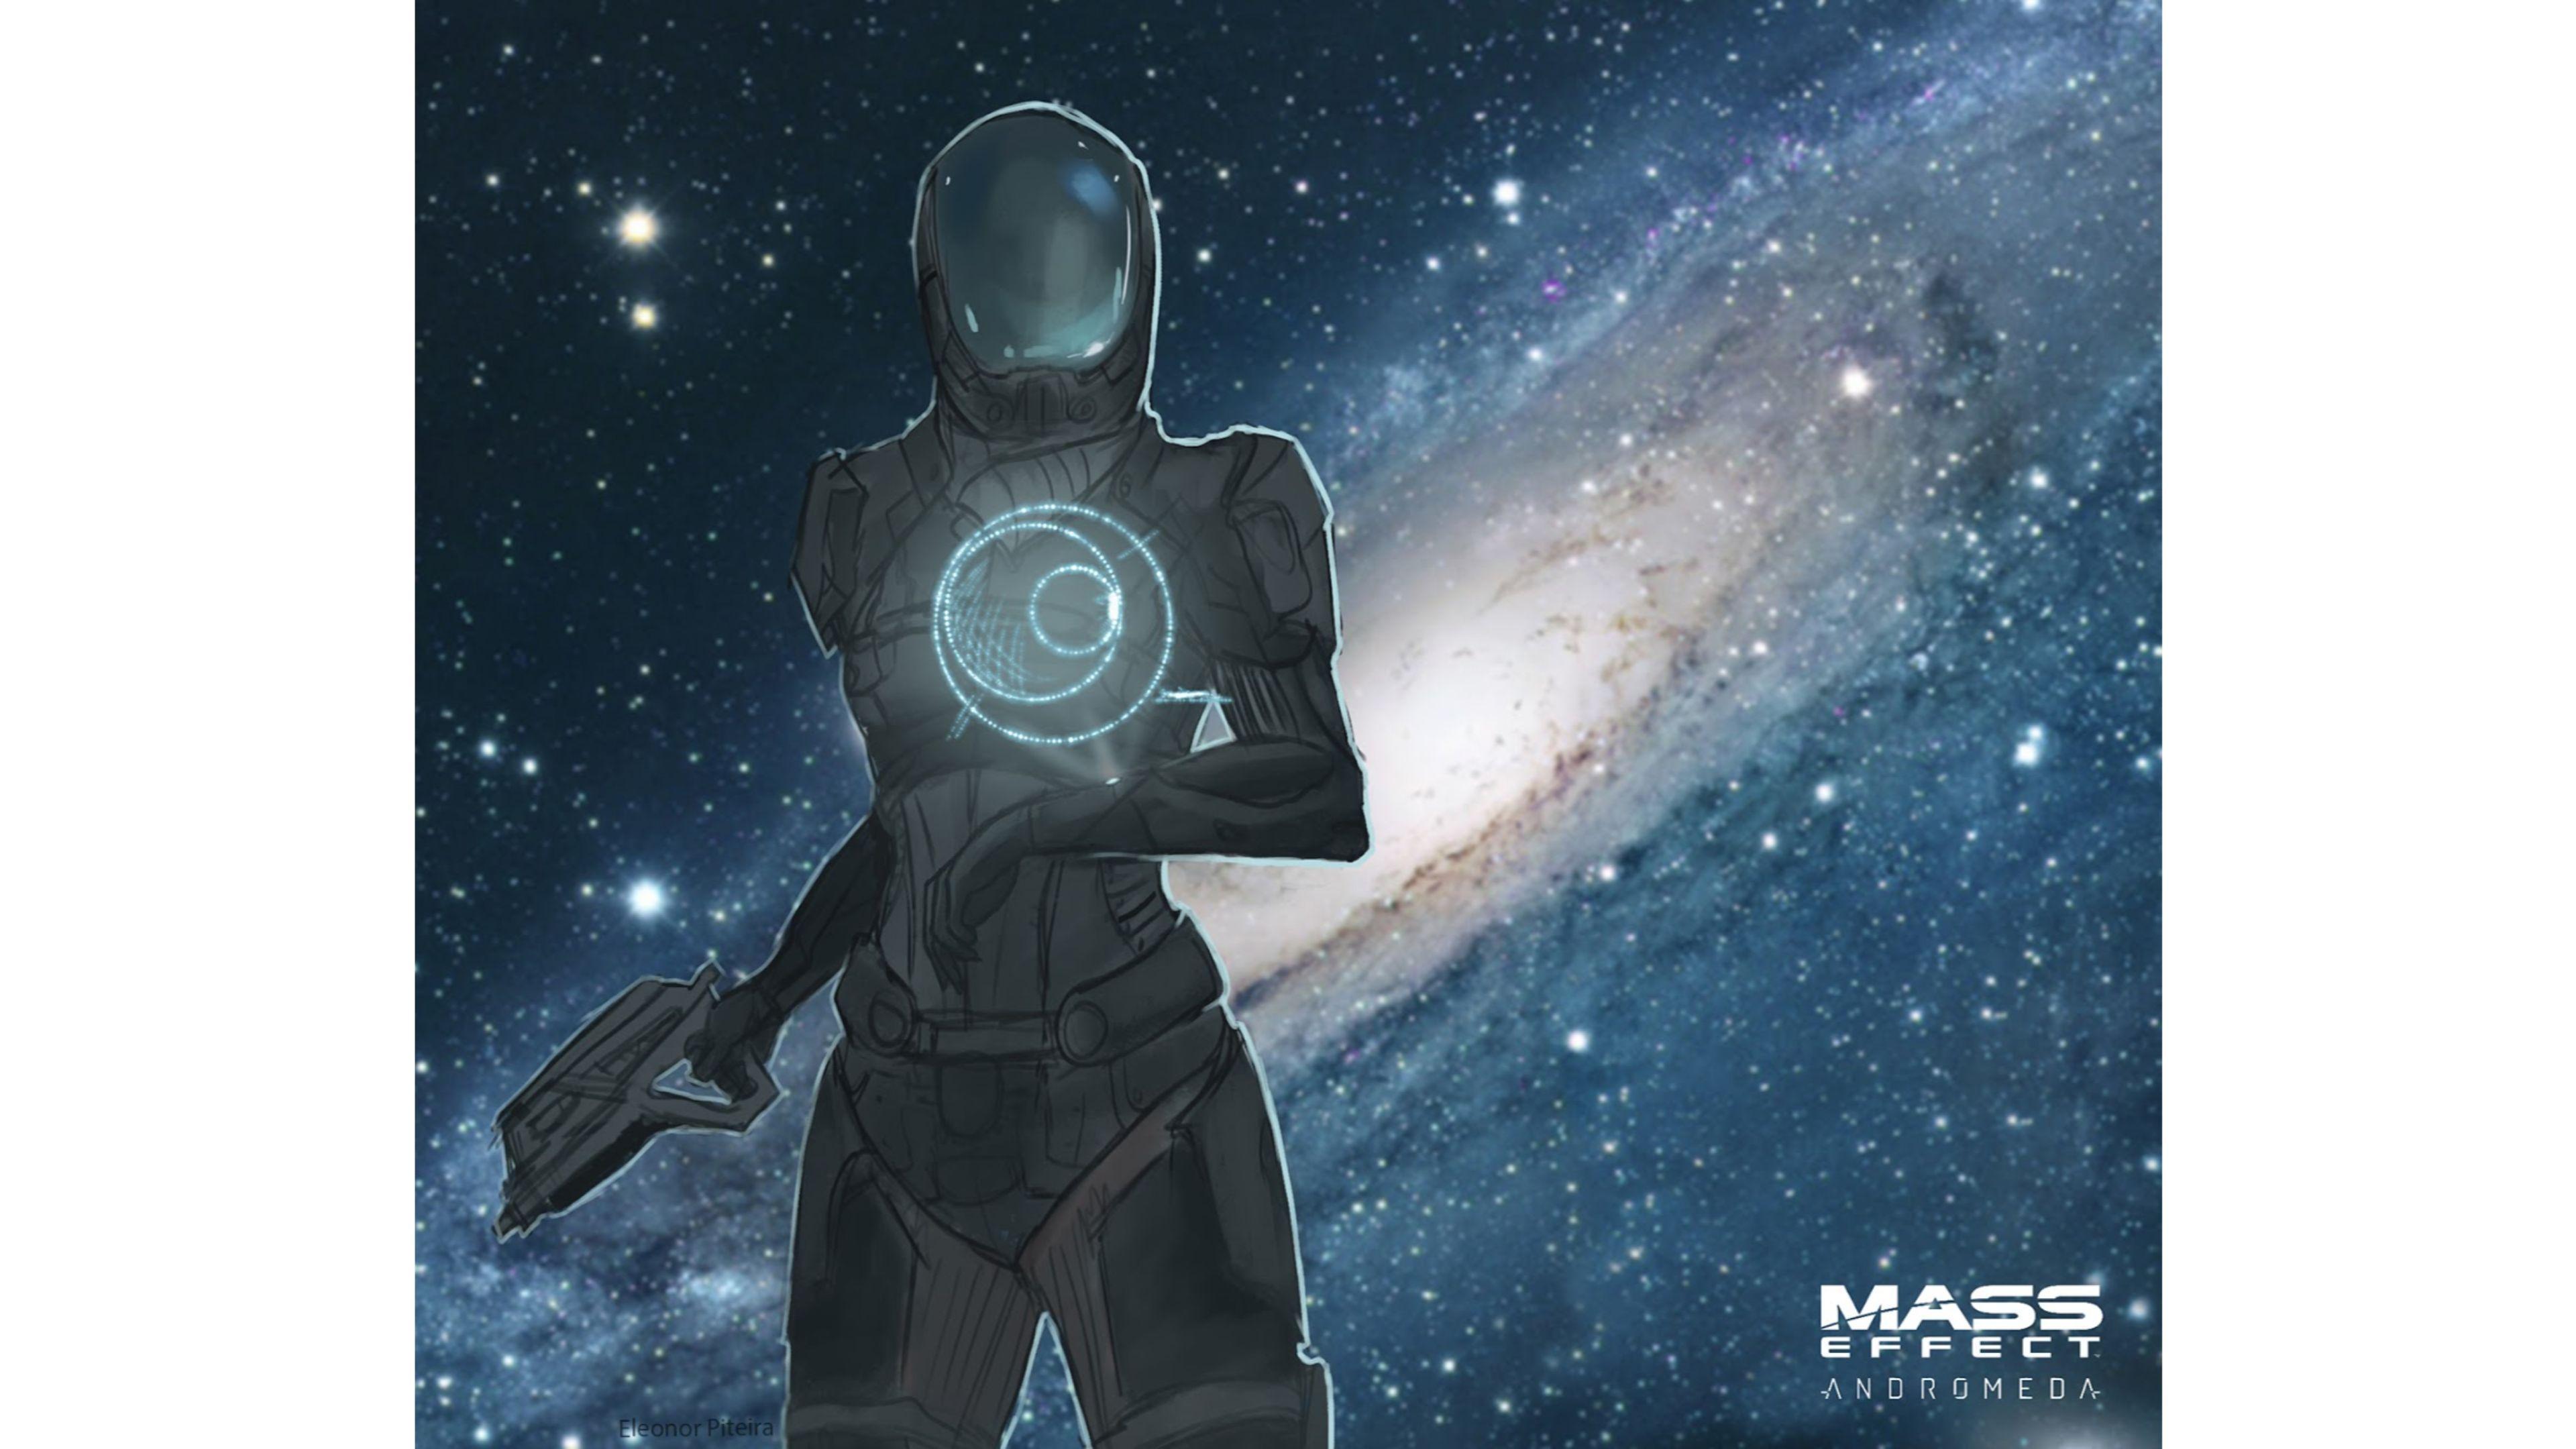 Cool 2016 Mass Effect Andromeda 4K Wallpaper. Free 4K Wallpaper